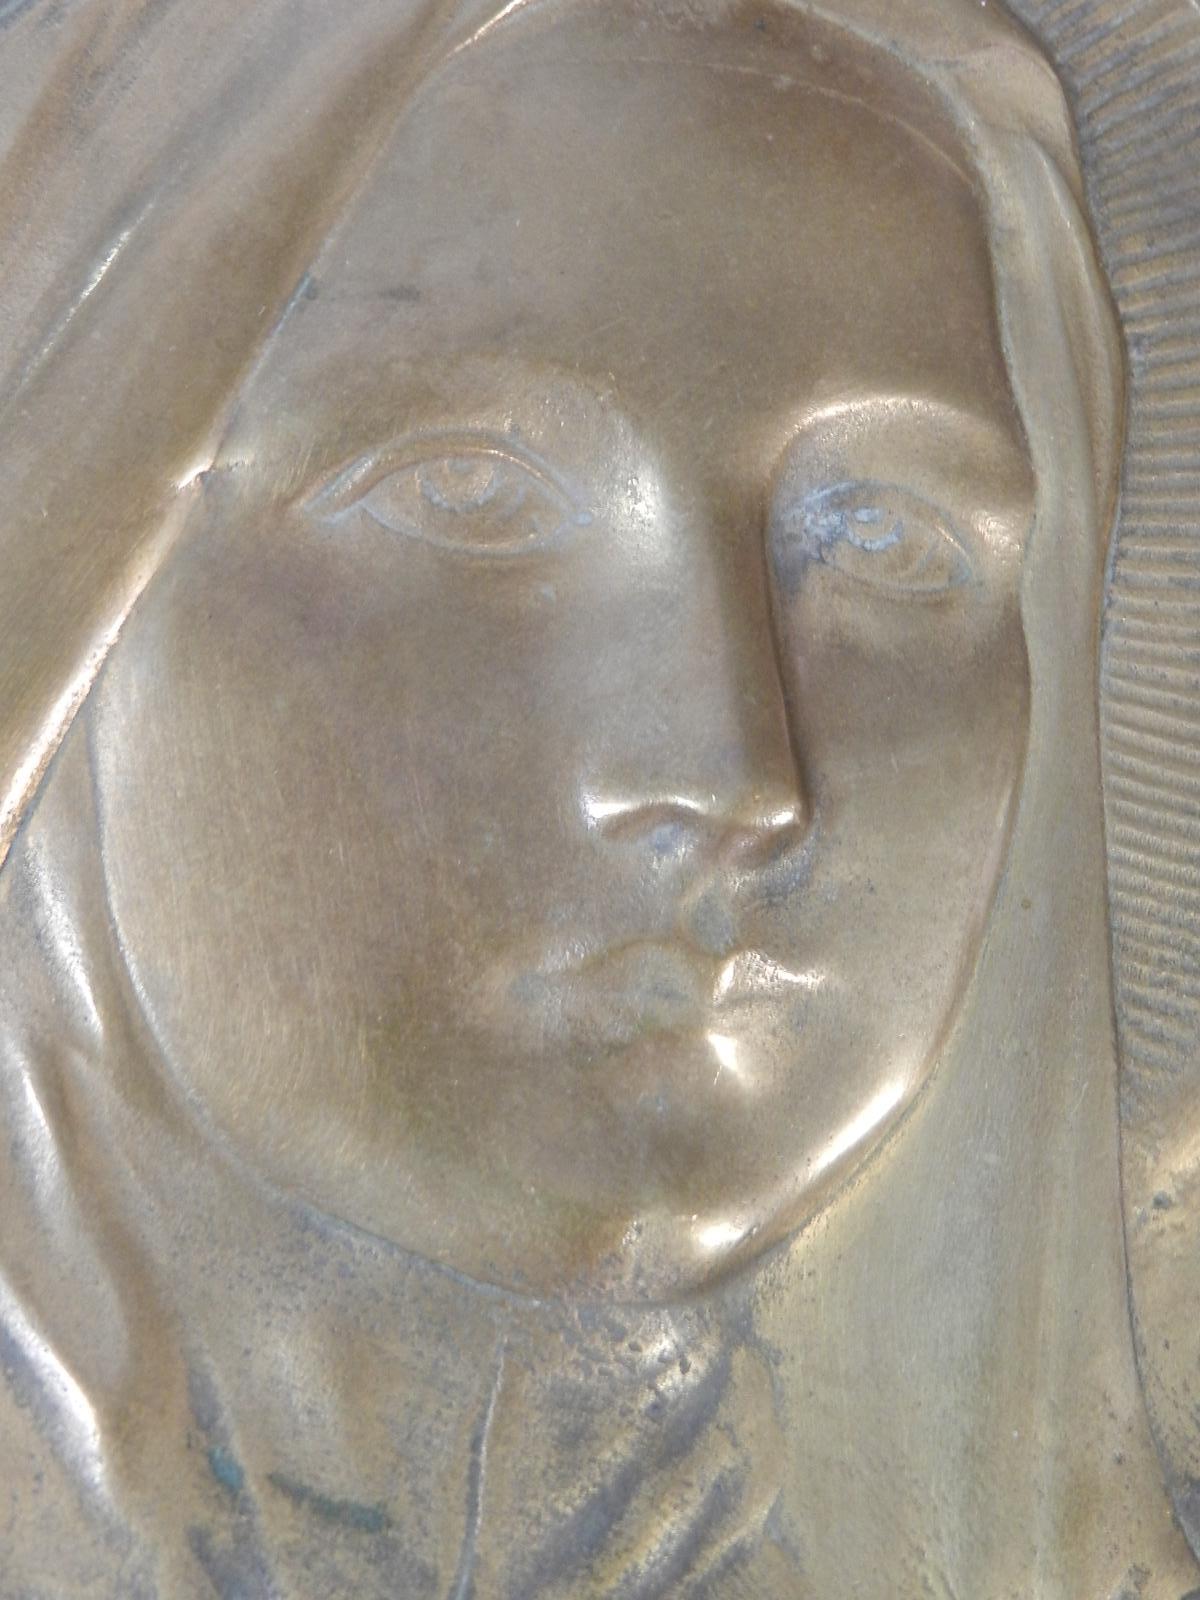 Mary Bronze-Wandtafel-Skulptur, signierte Medaillon-Skulptur, Französisch, frühes 20. Jahrhundert (Belle Époque)